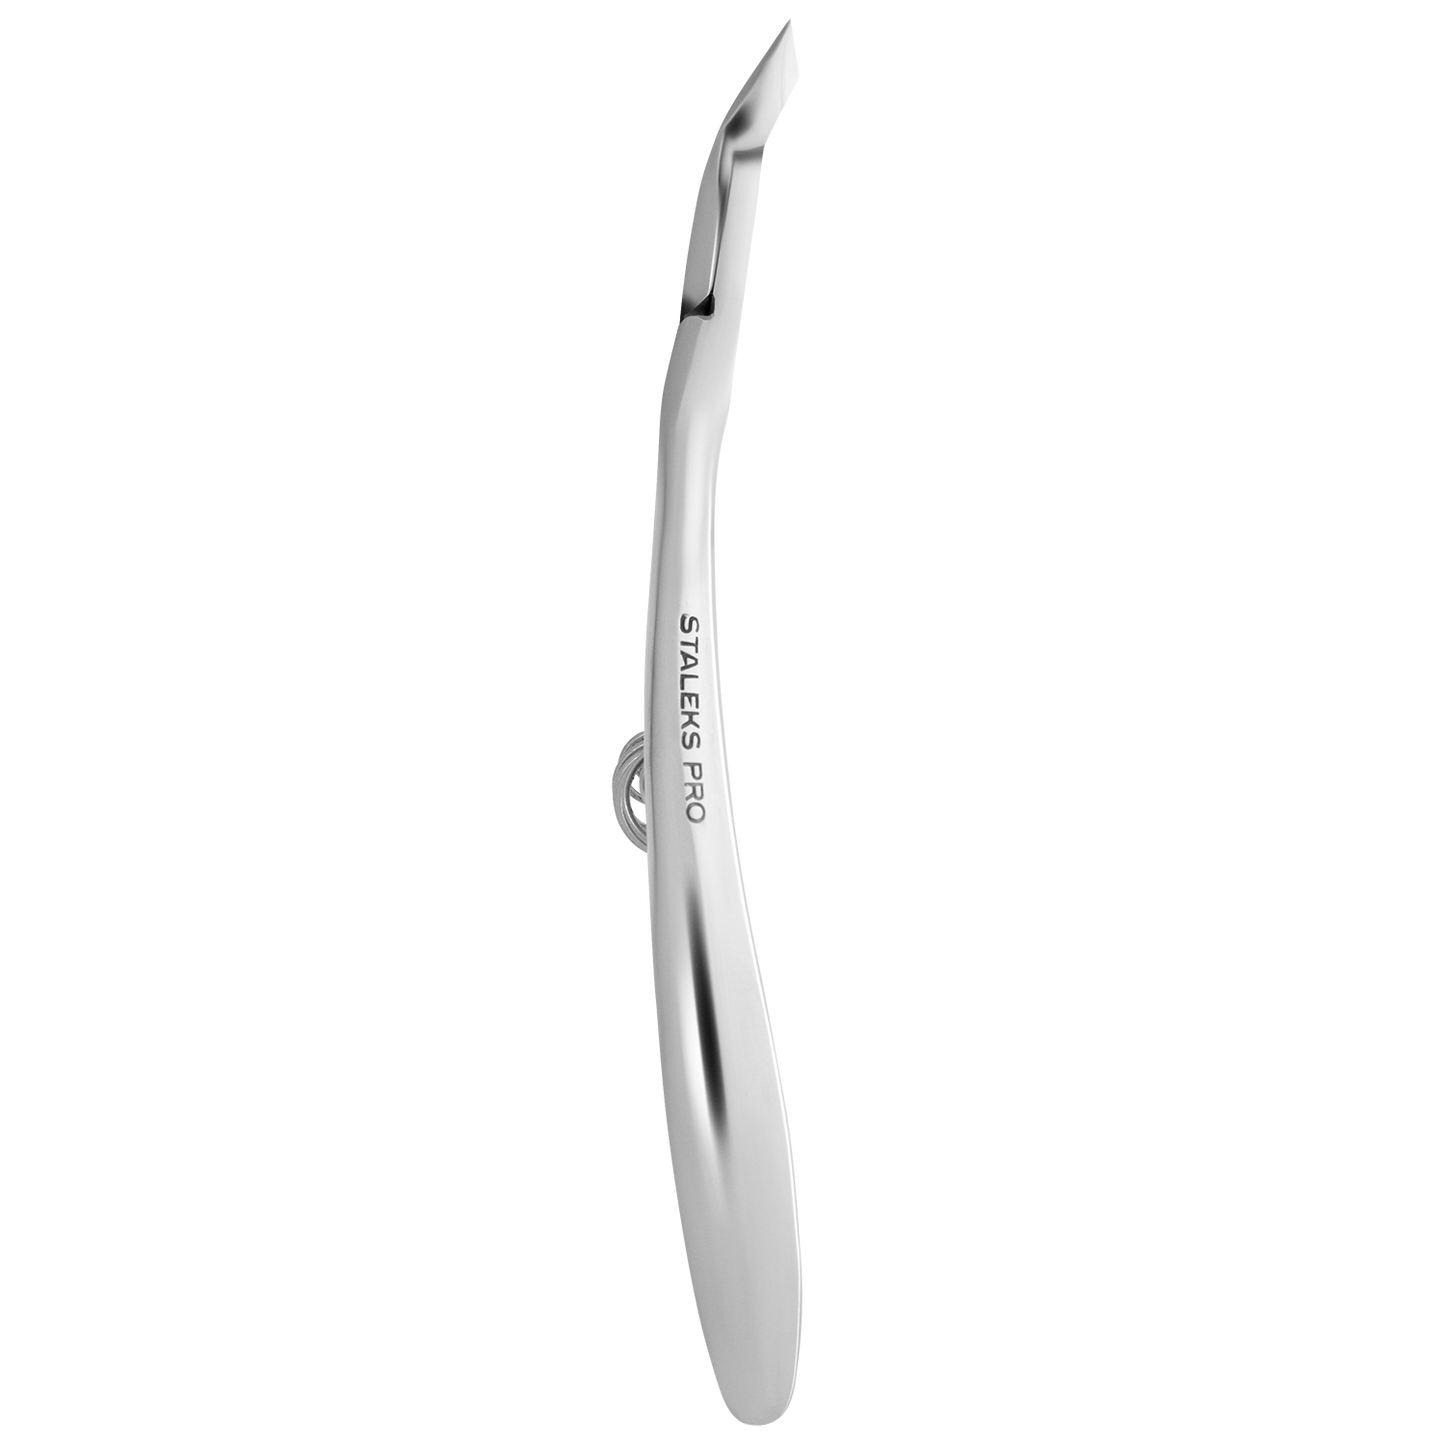 STALEKS PRO Expert Cuticle Nippers, model NE-81-6 (6mm edge)